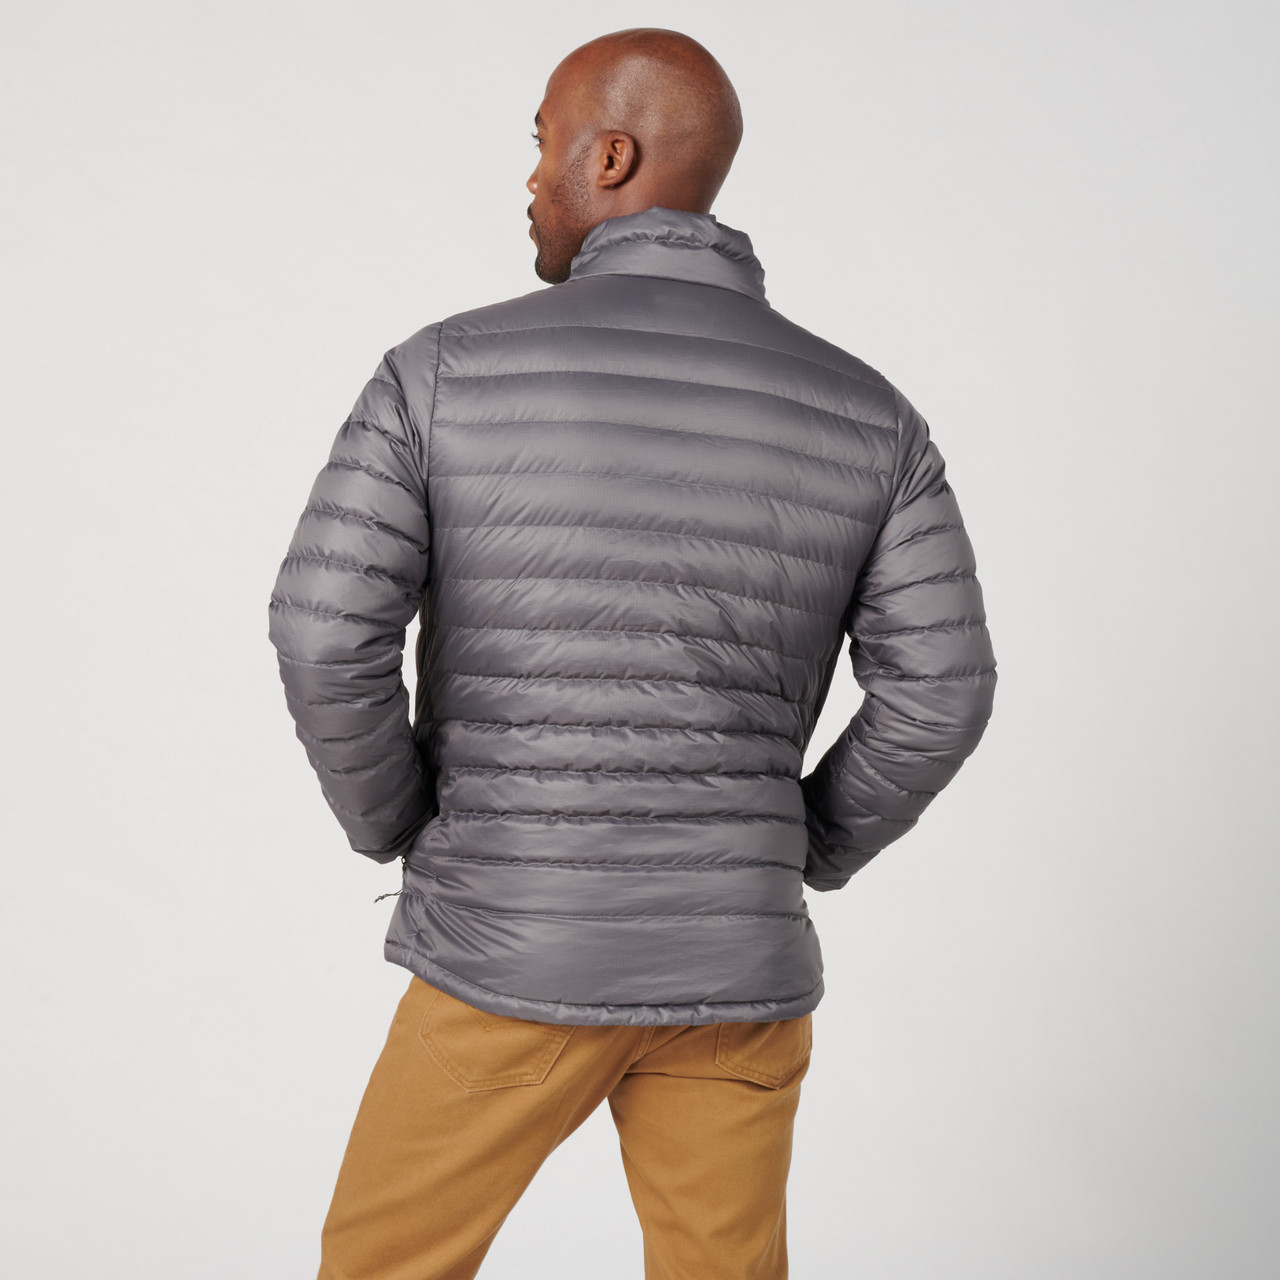 Sierra Designs Men's Hurricane Rain Jacket